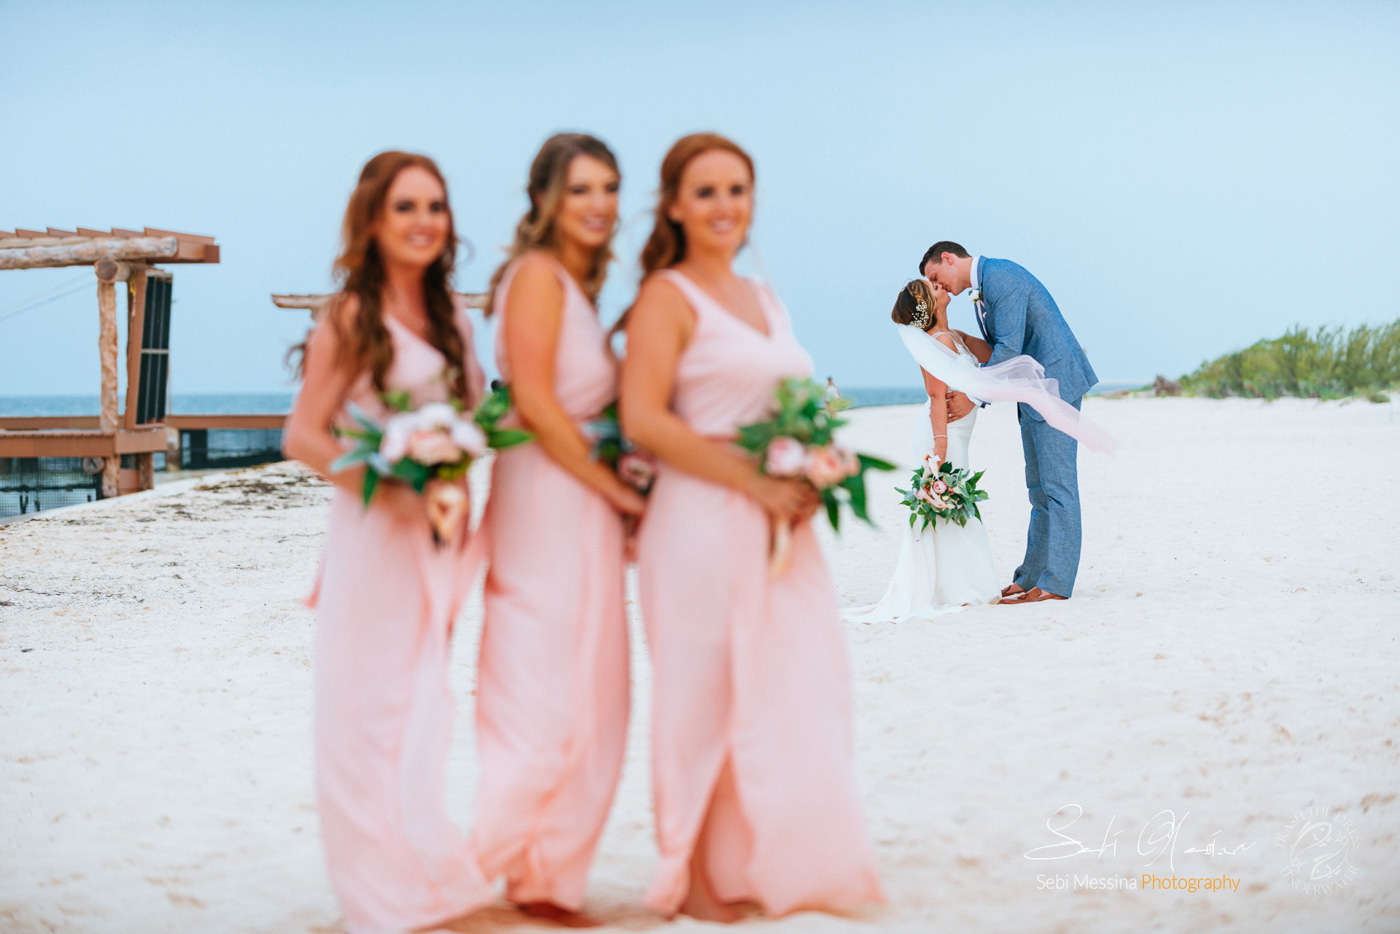 Wedding Mandala Beach - Sebi Messina Photography